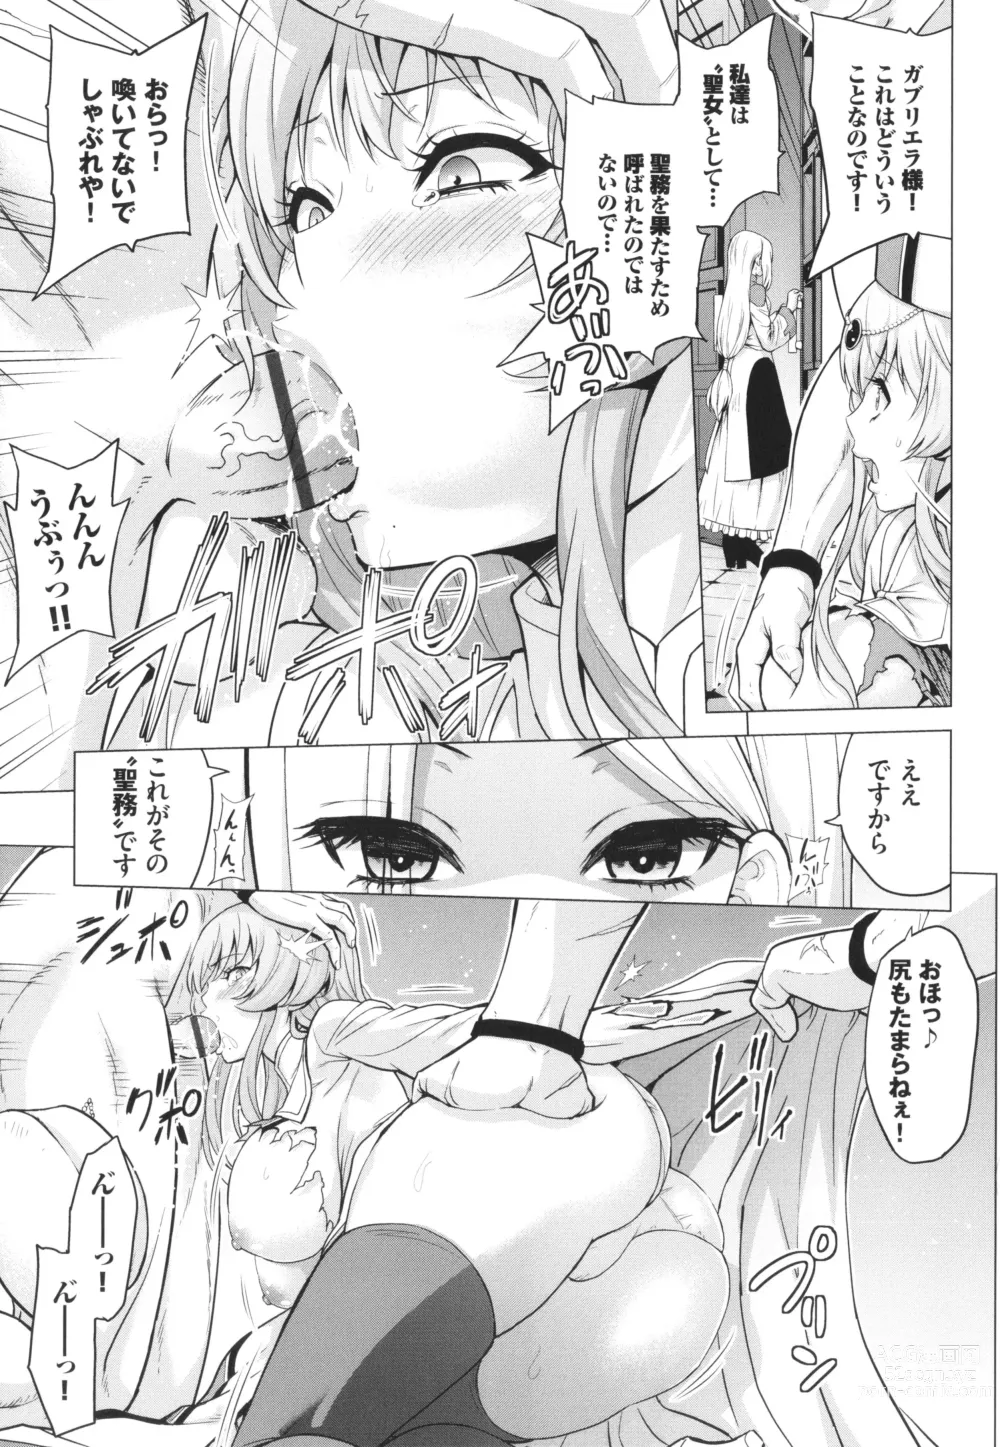 Page 20 of manga Seijo no Rakuin -Annunciation of despair-